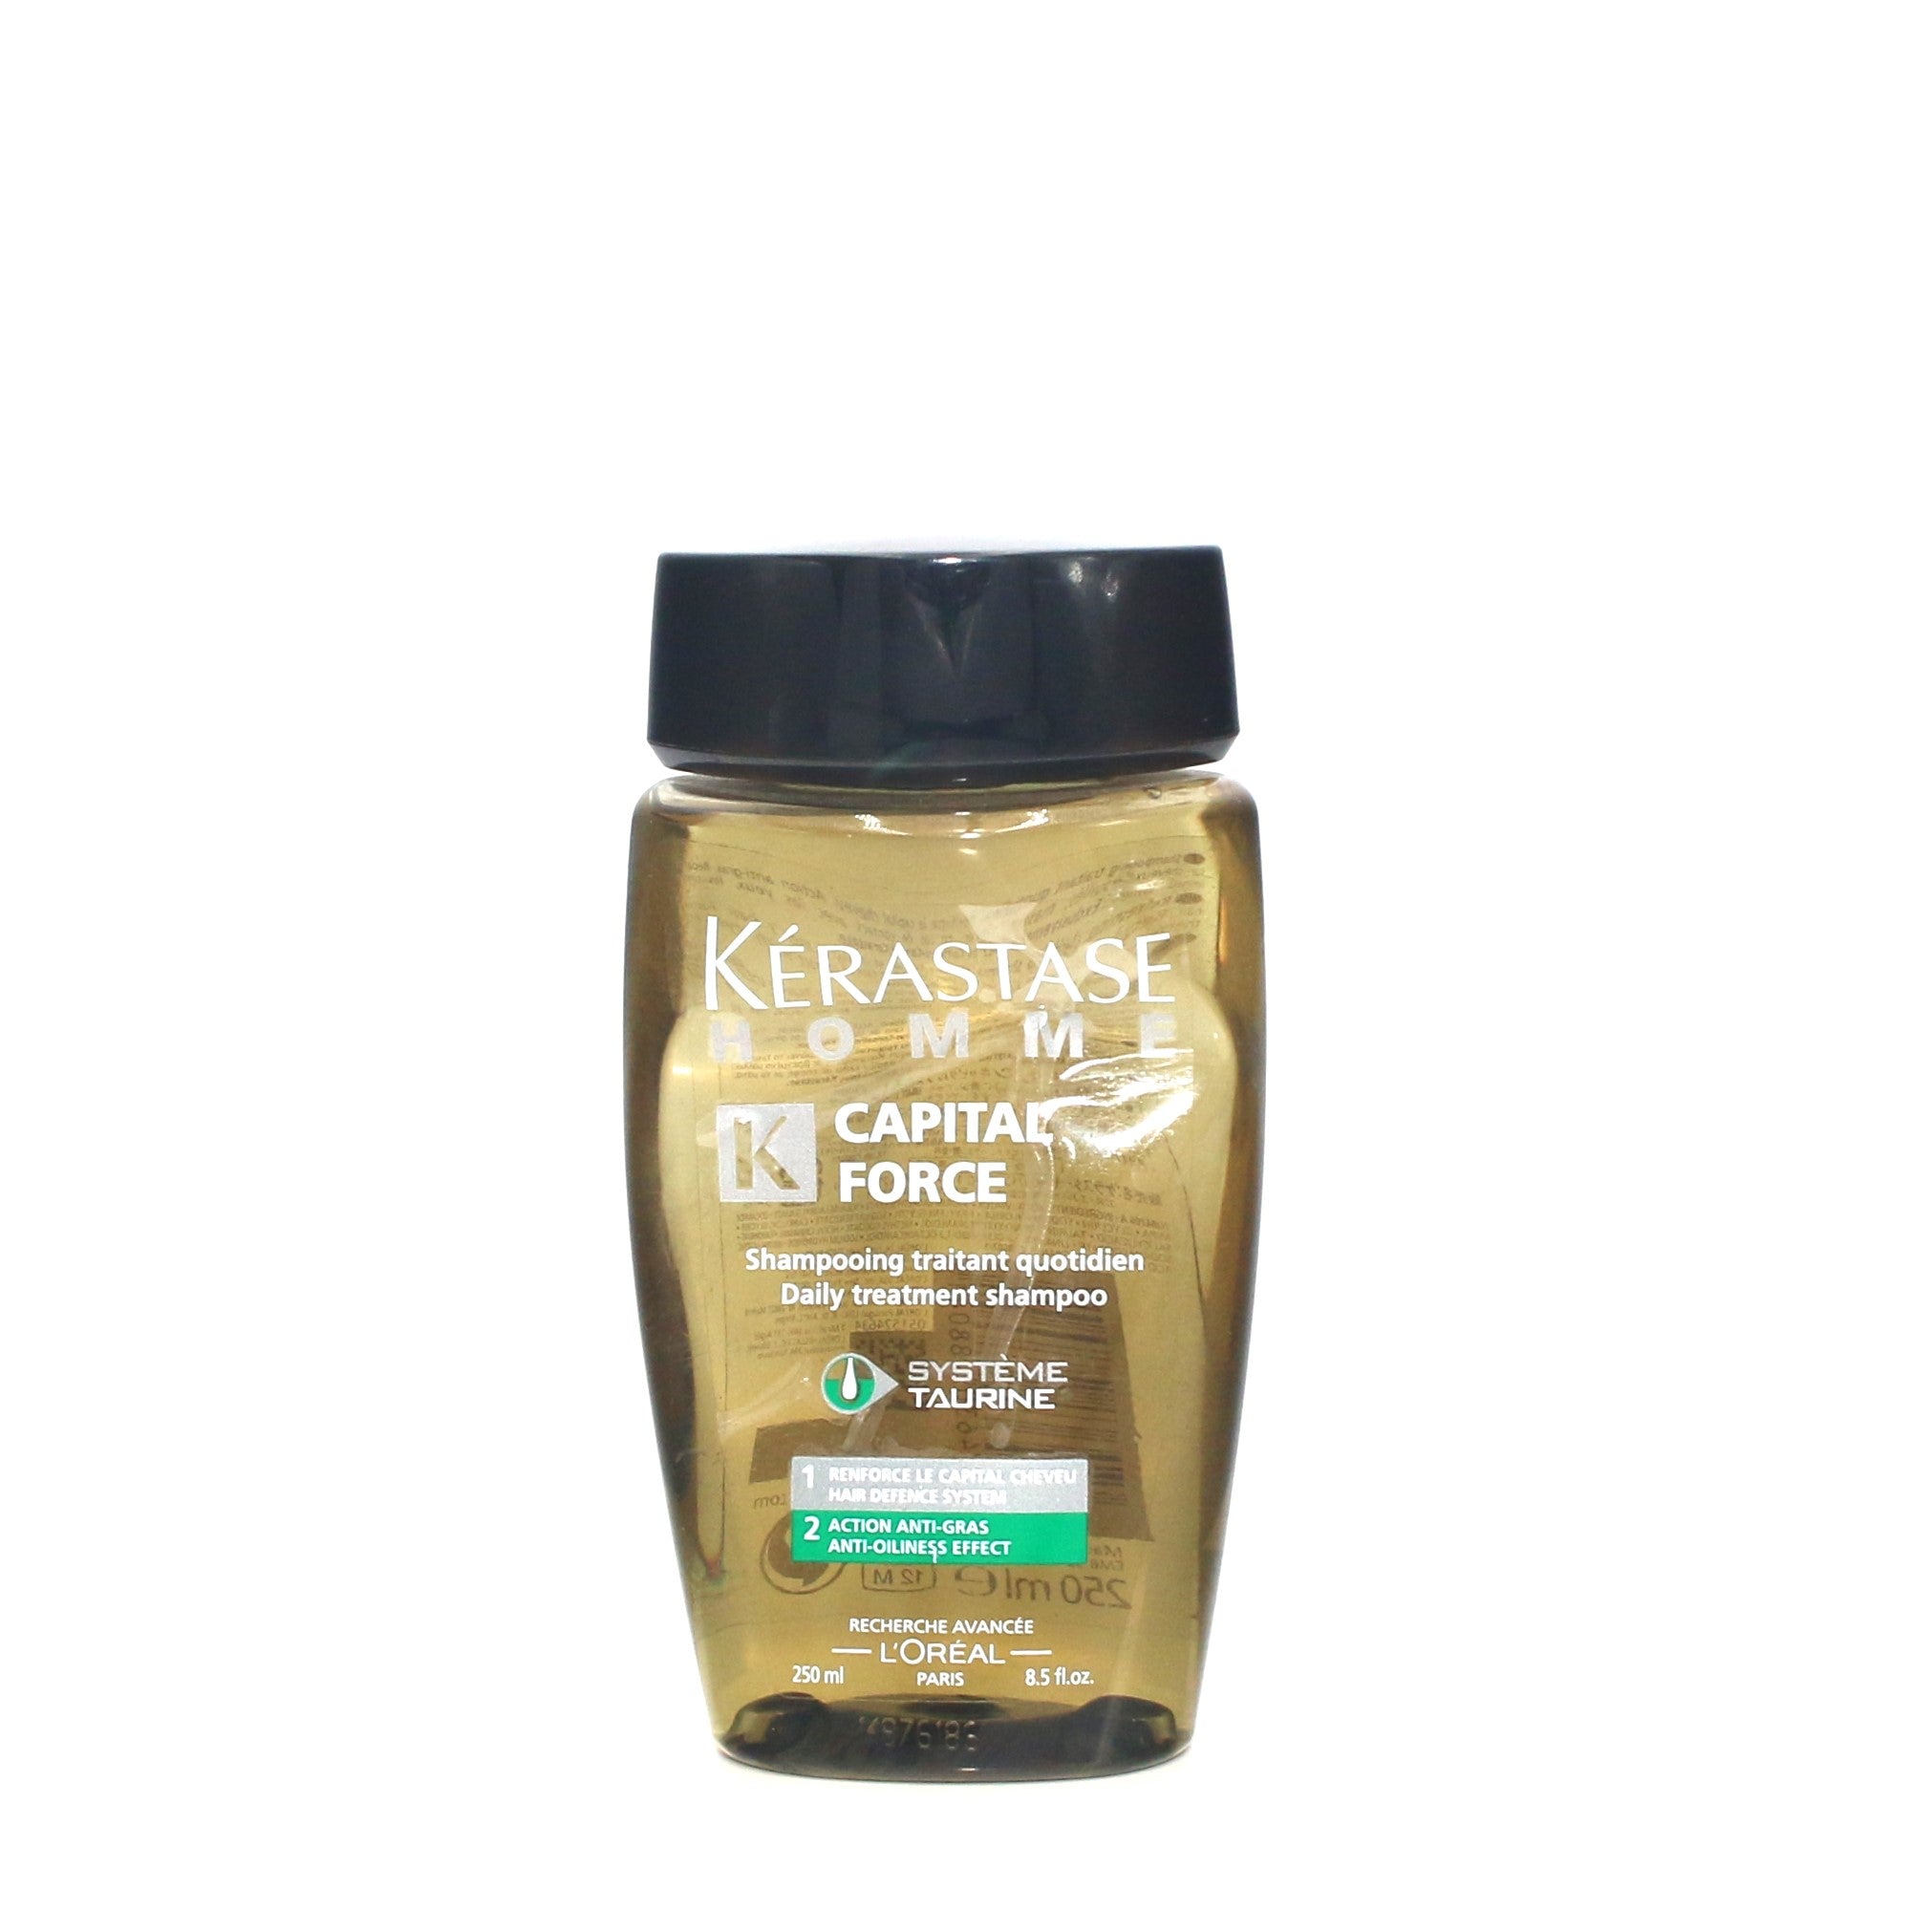 L'OREAL Kerastase Homme Capital Force Shampoo 8.5 oz